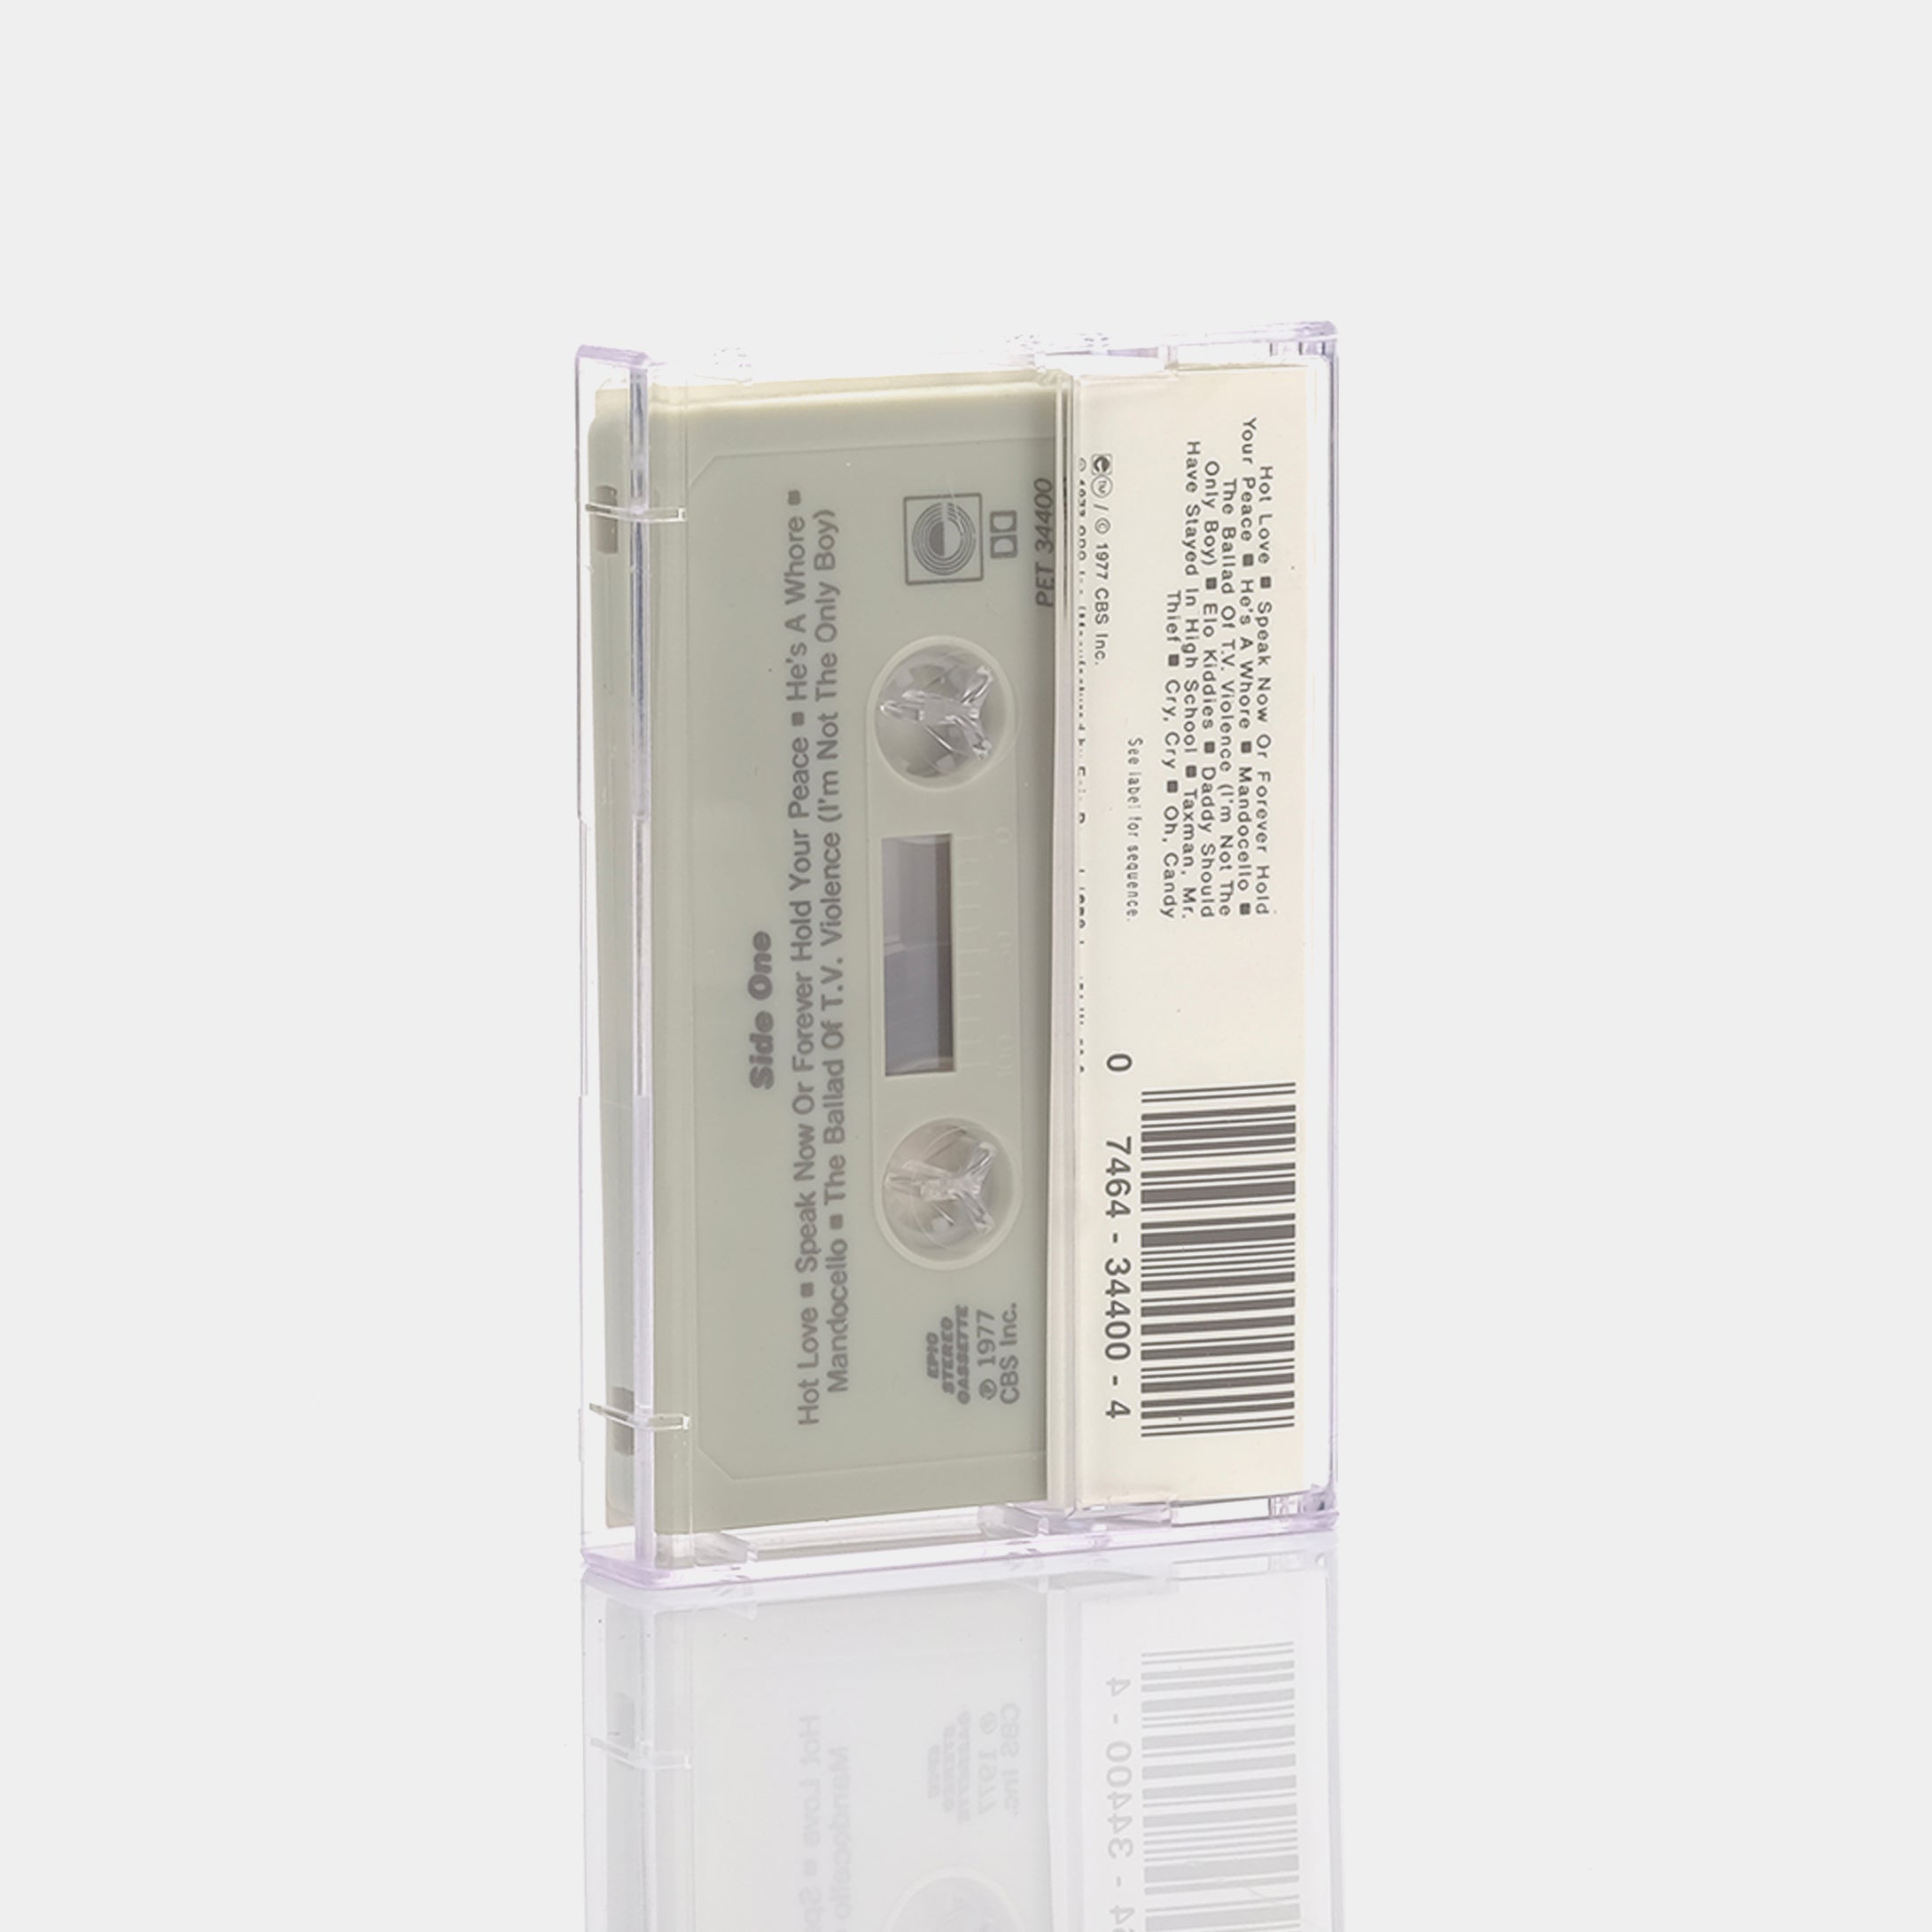 Cheap Trick - Cheap Trick Cassette Tape